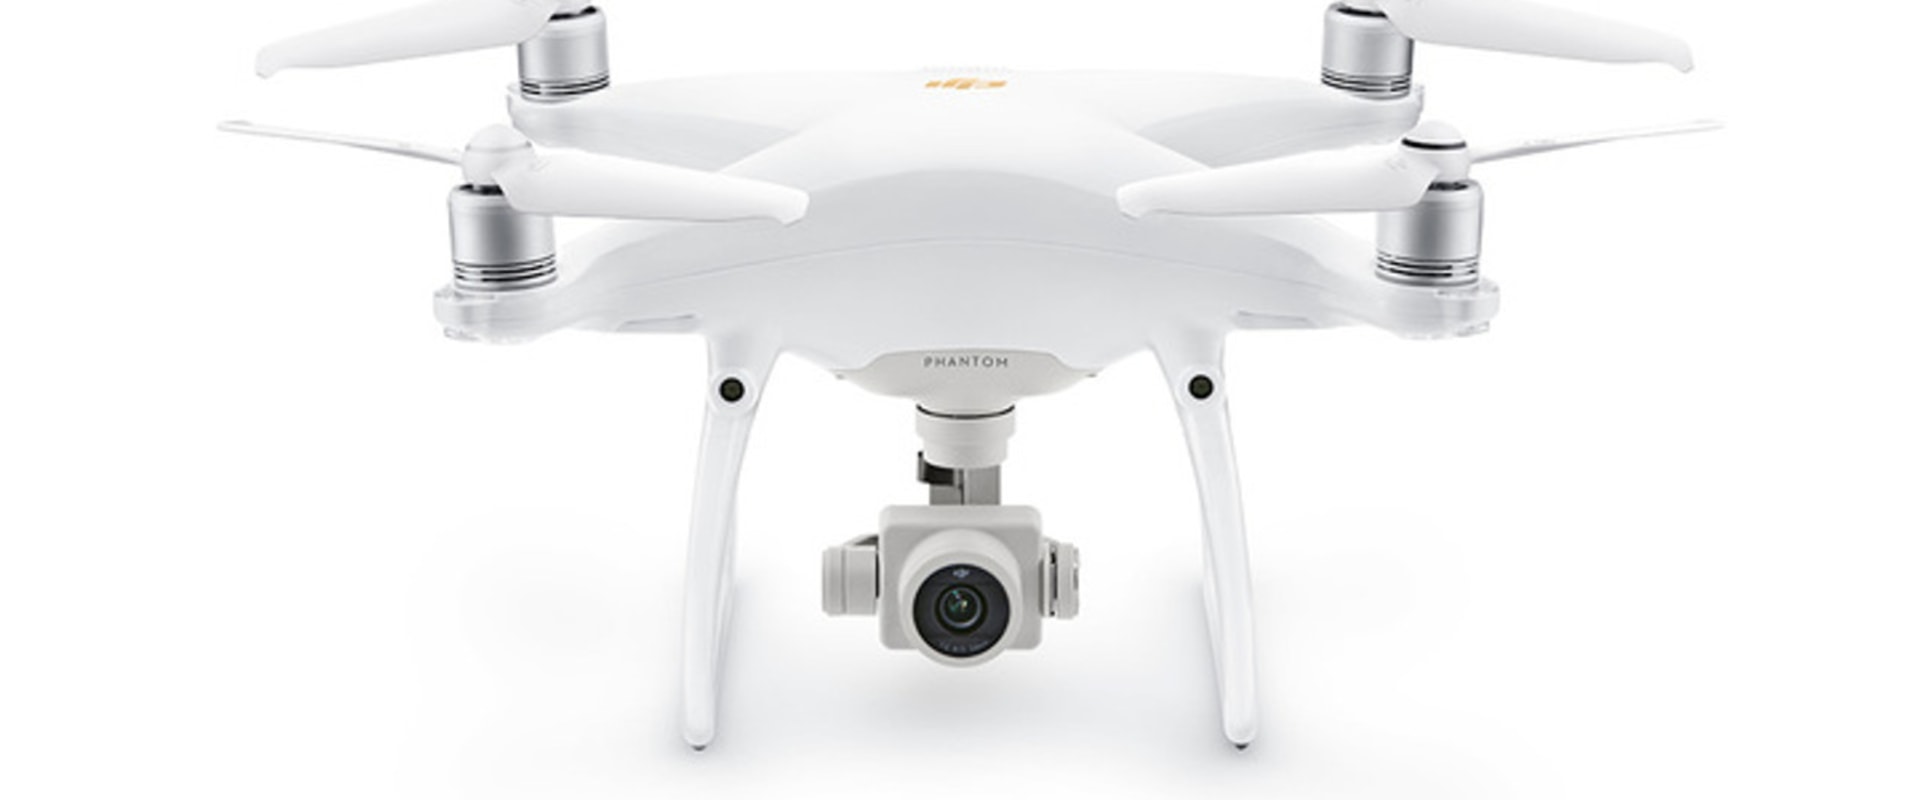 Price Range for Drone Cameras